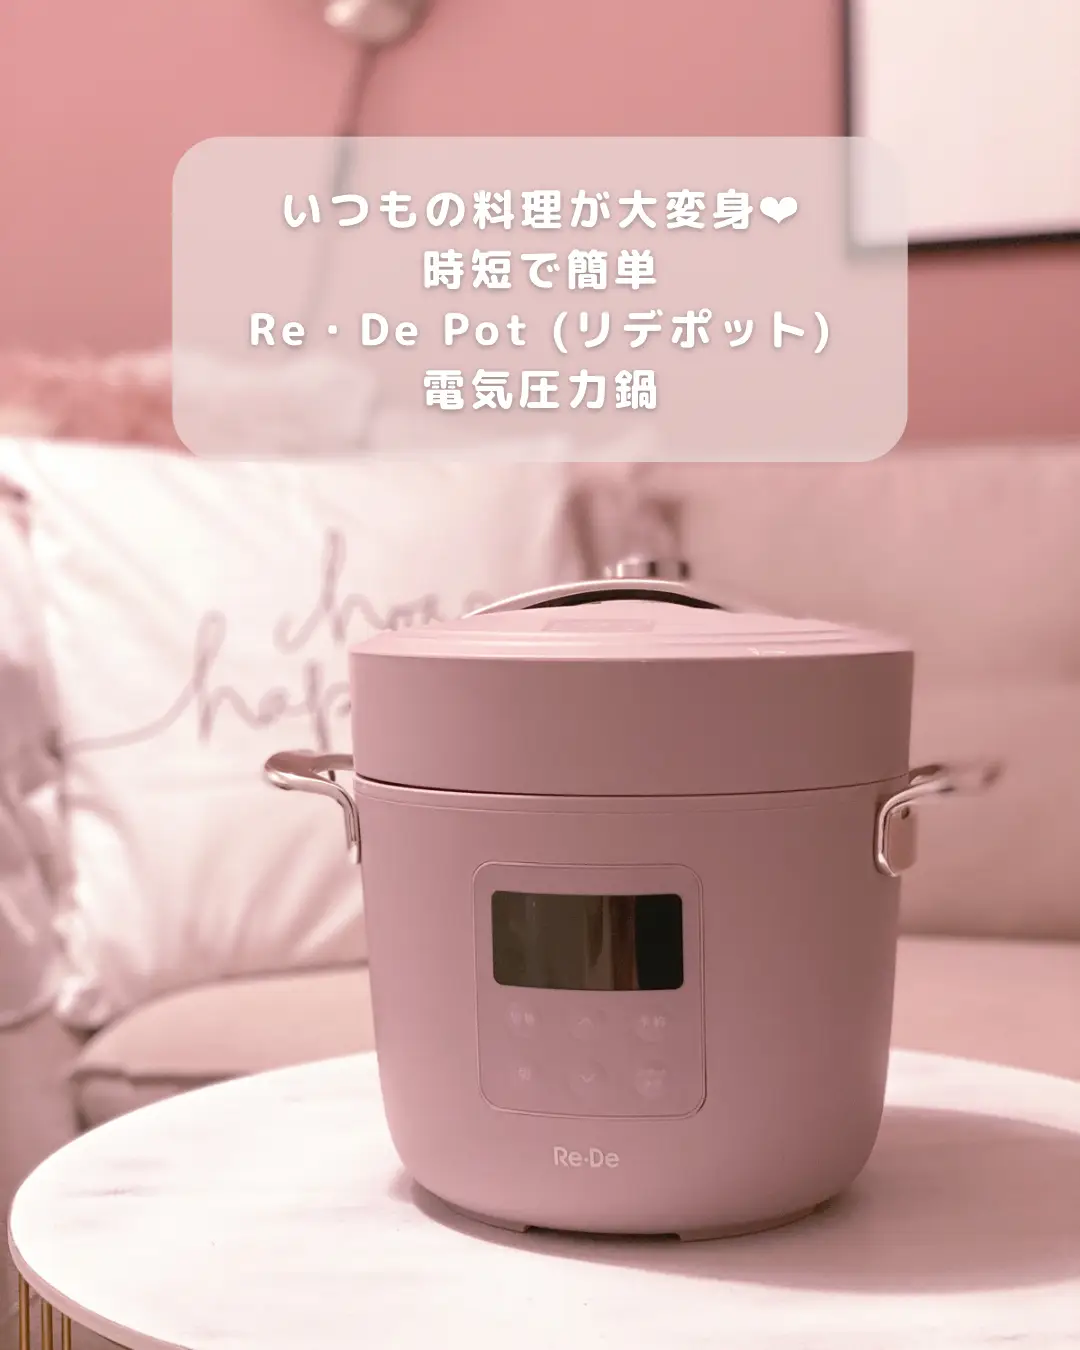 Afternoon tea 圧力鍋#50品簡単レシピ付き - 調理器具